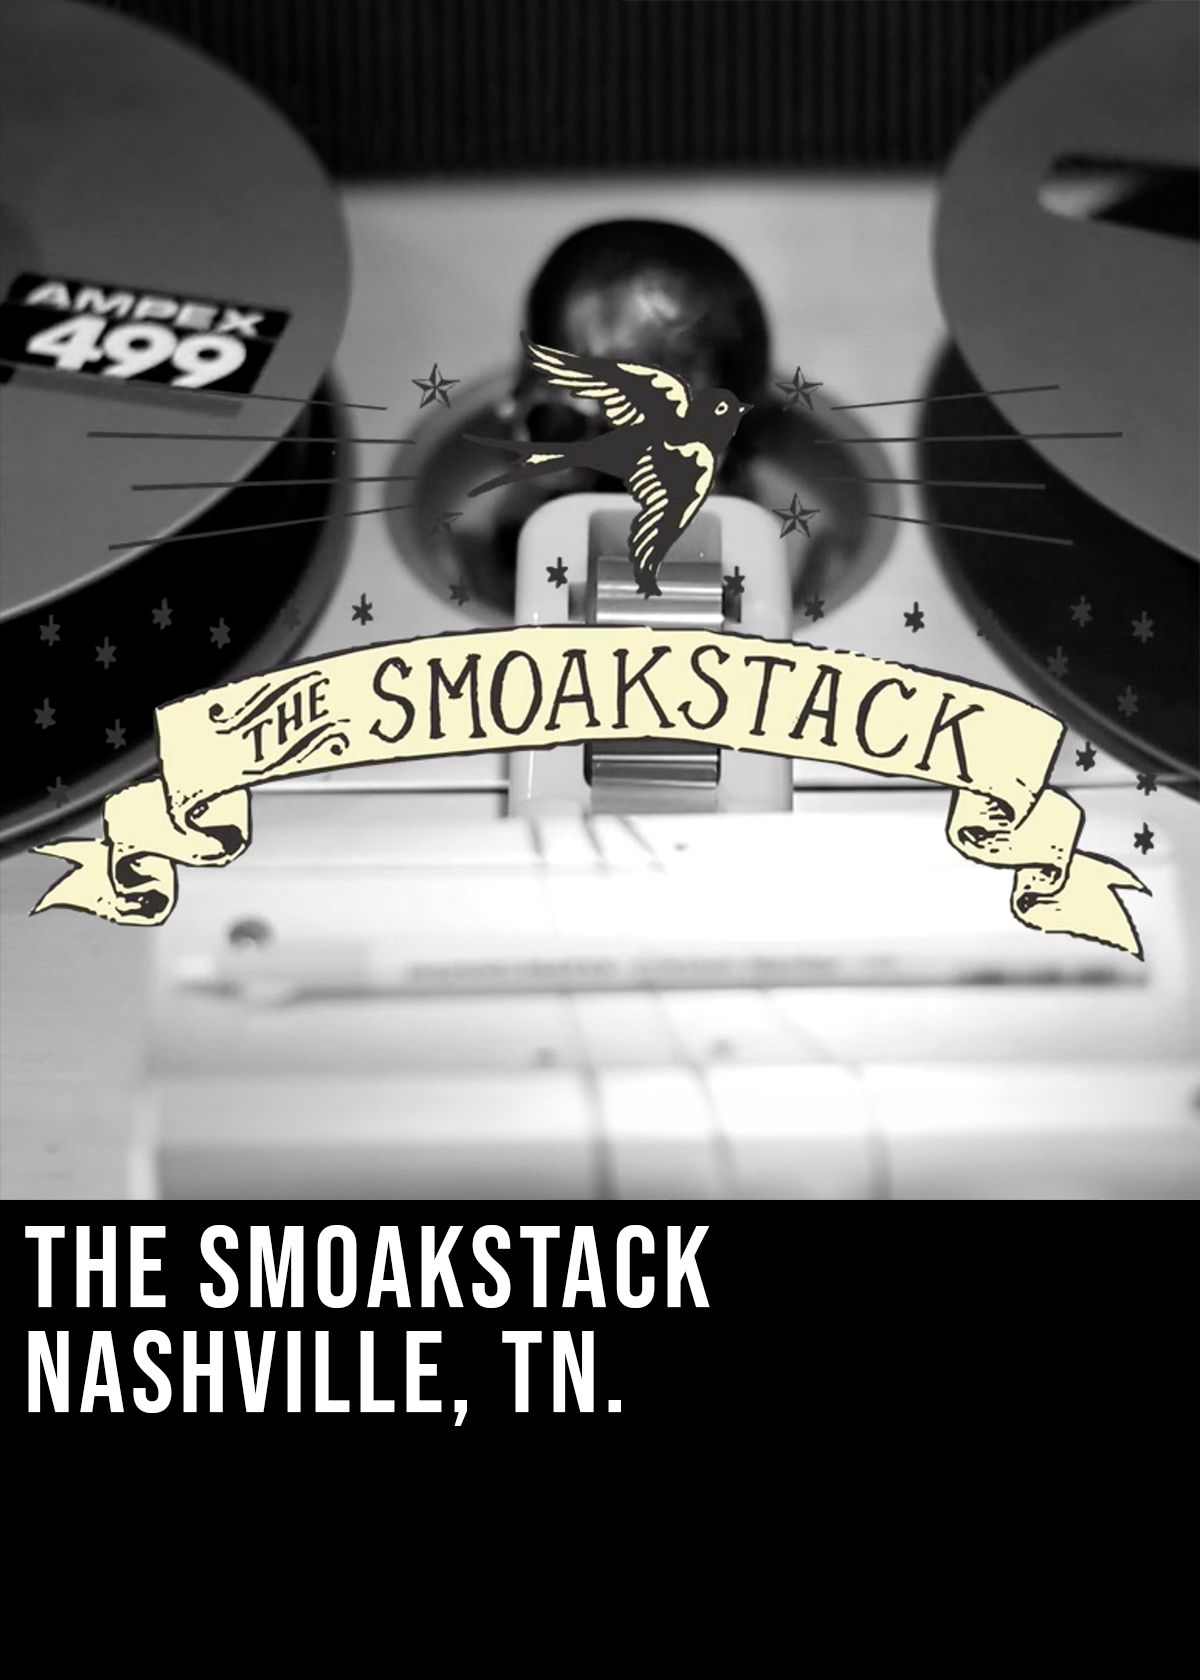 The Smoakstack Paul Moak Nashville Tennessee